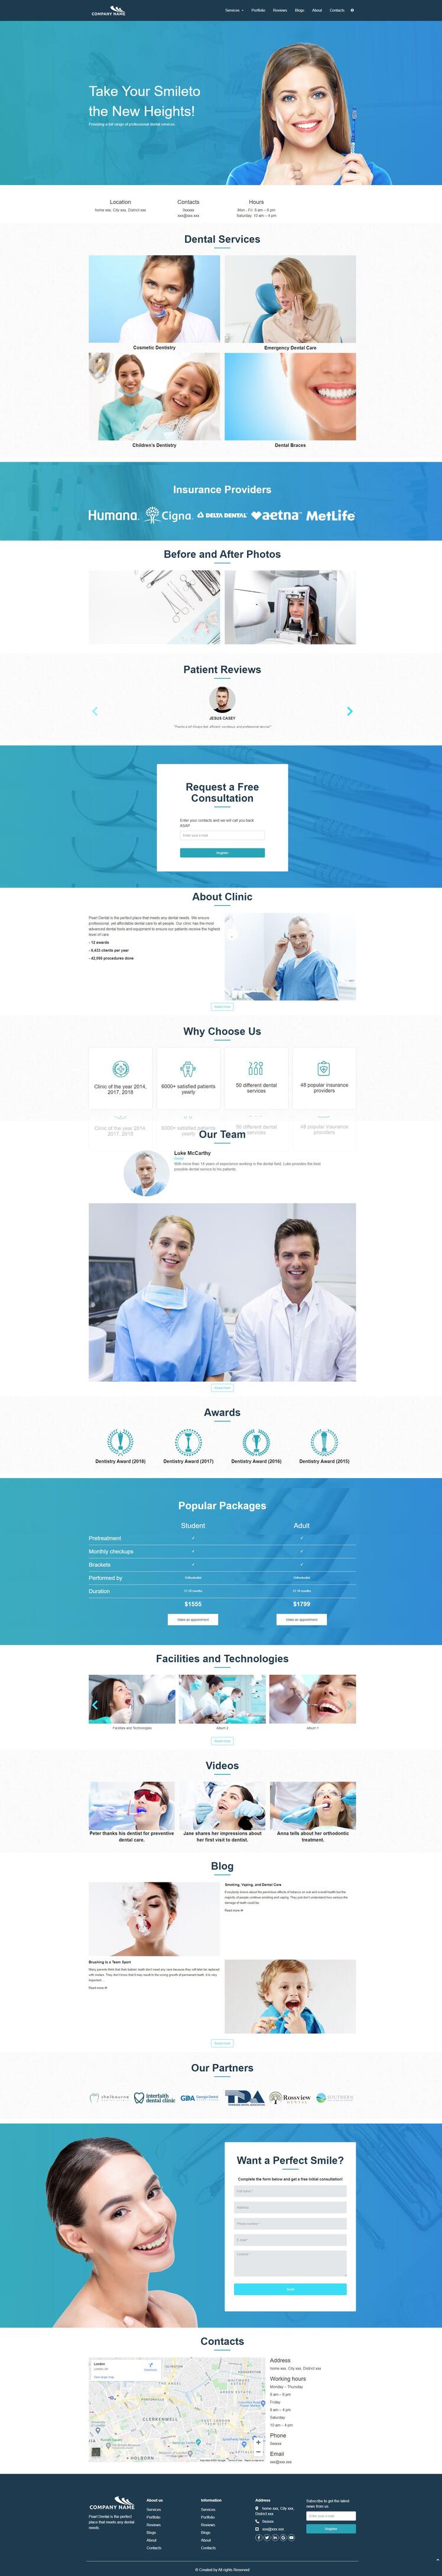 Thiết kế website bệnh viện 36